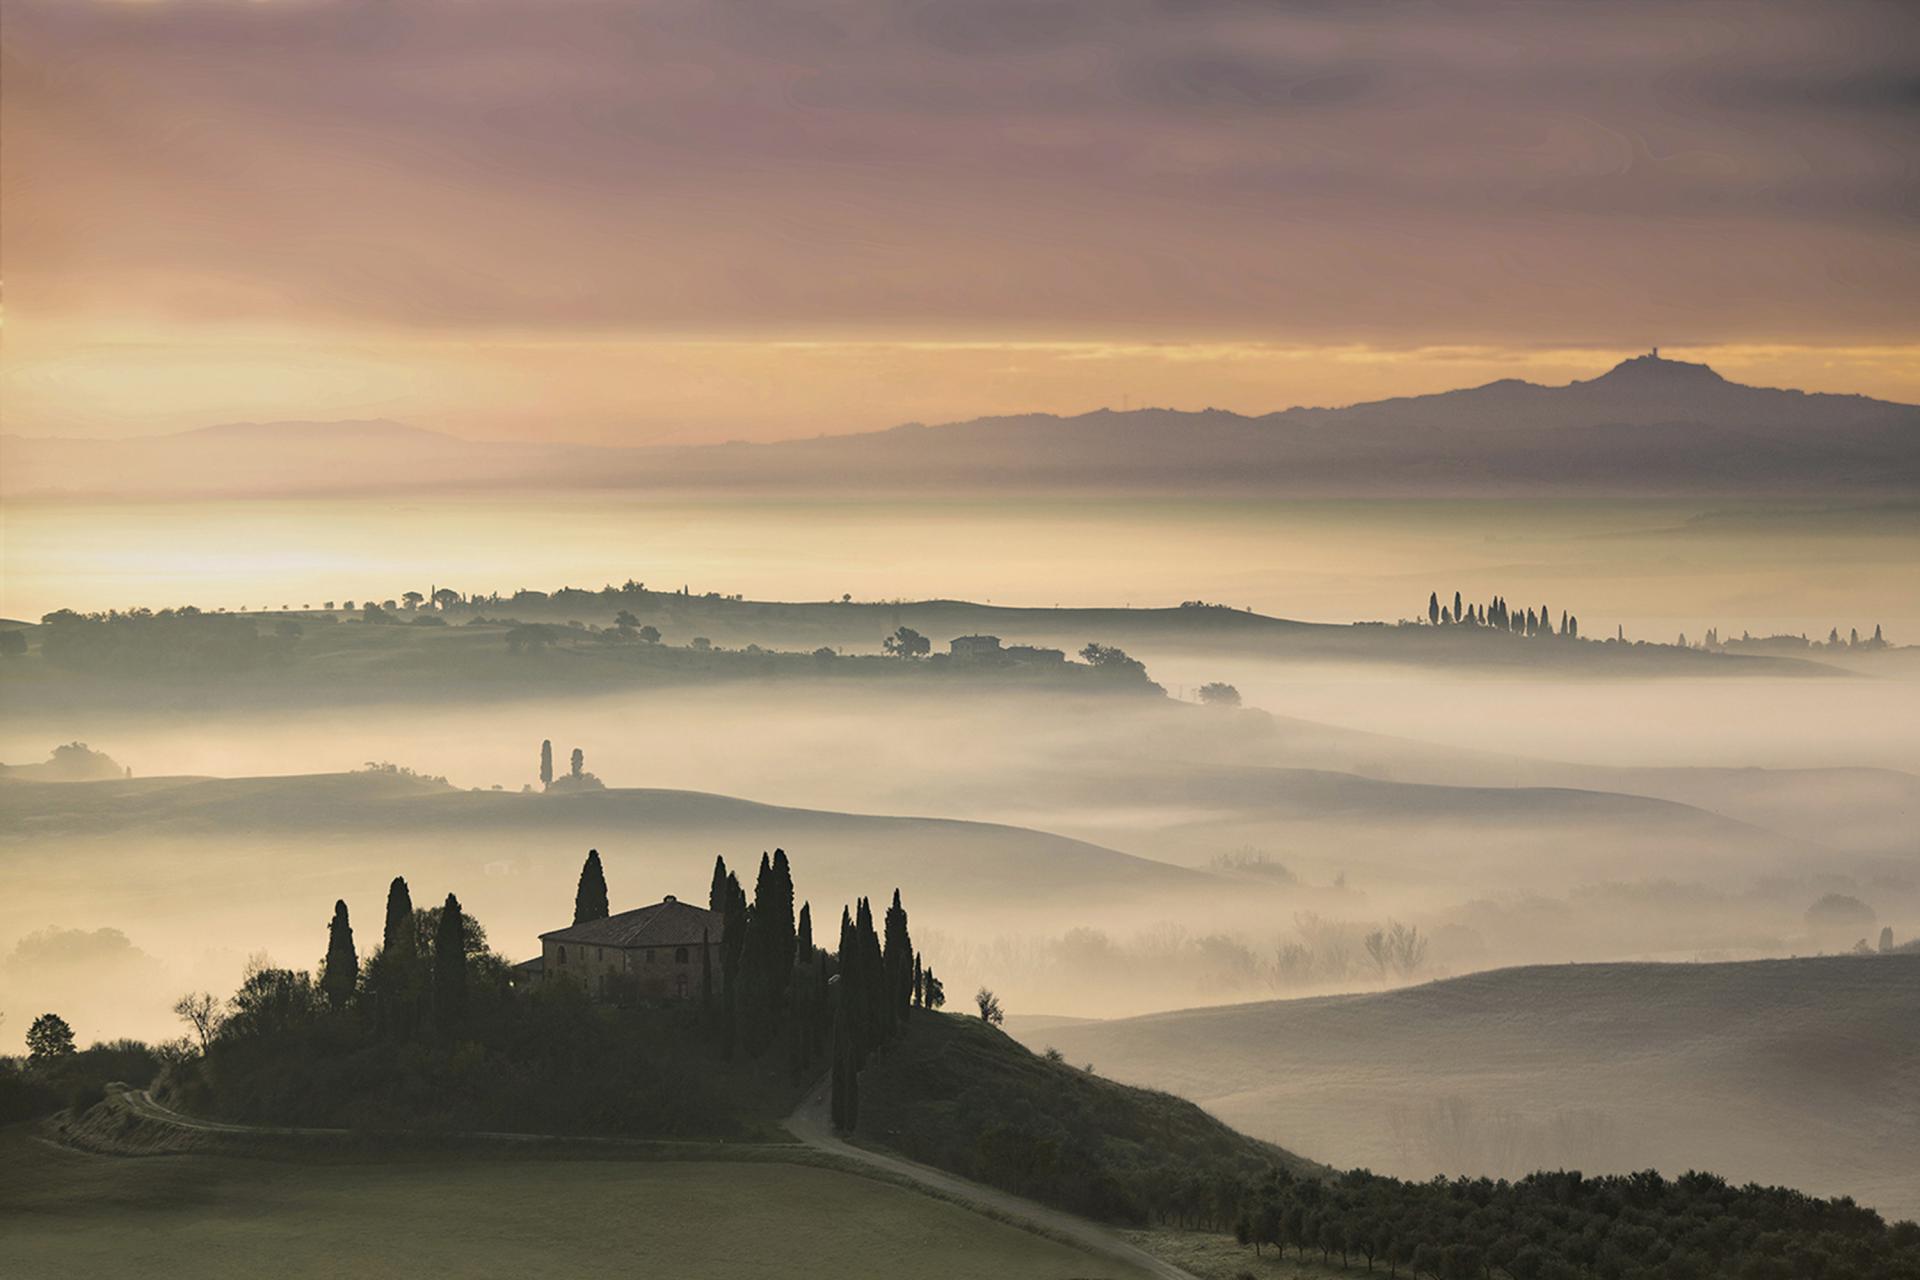 New York Photography Awards Winner - Misty Sunrise in Tuscany